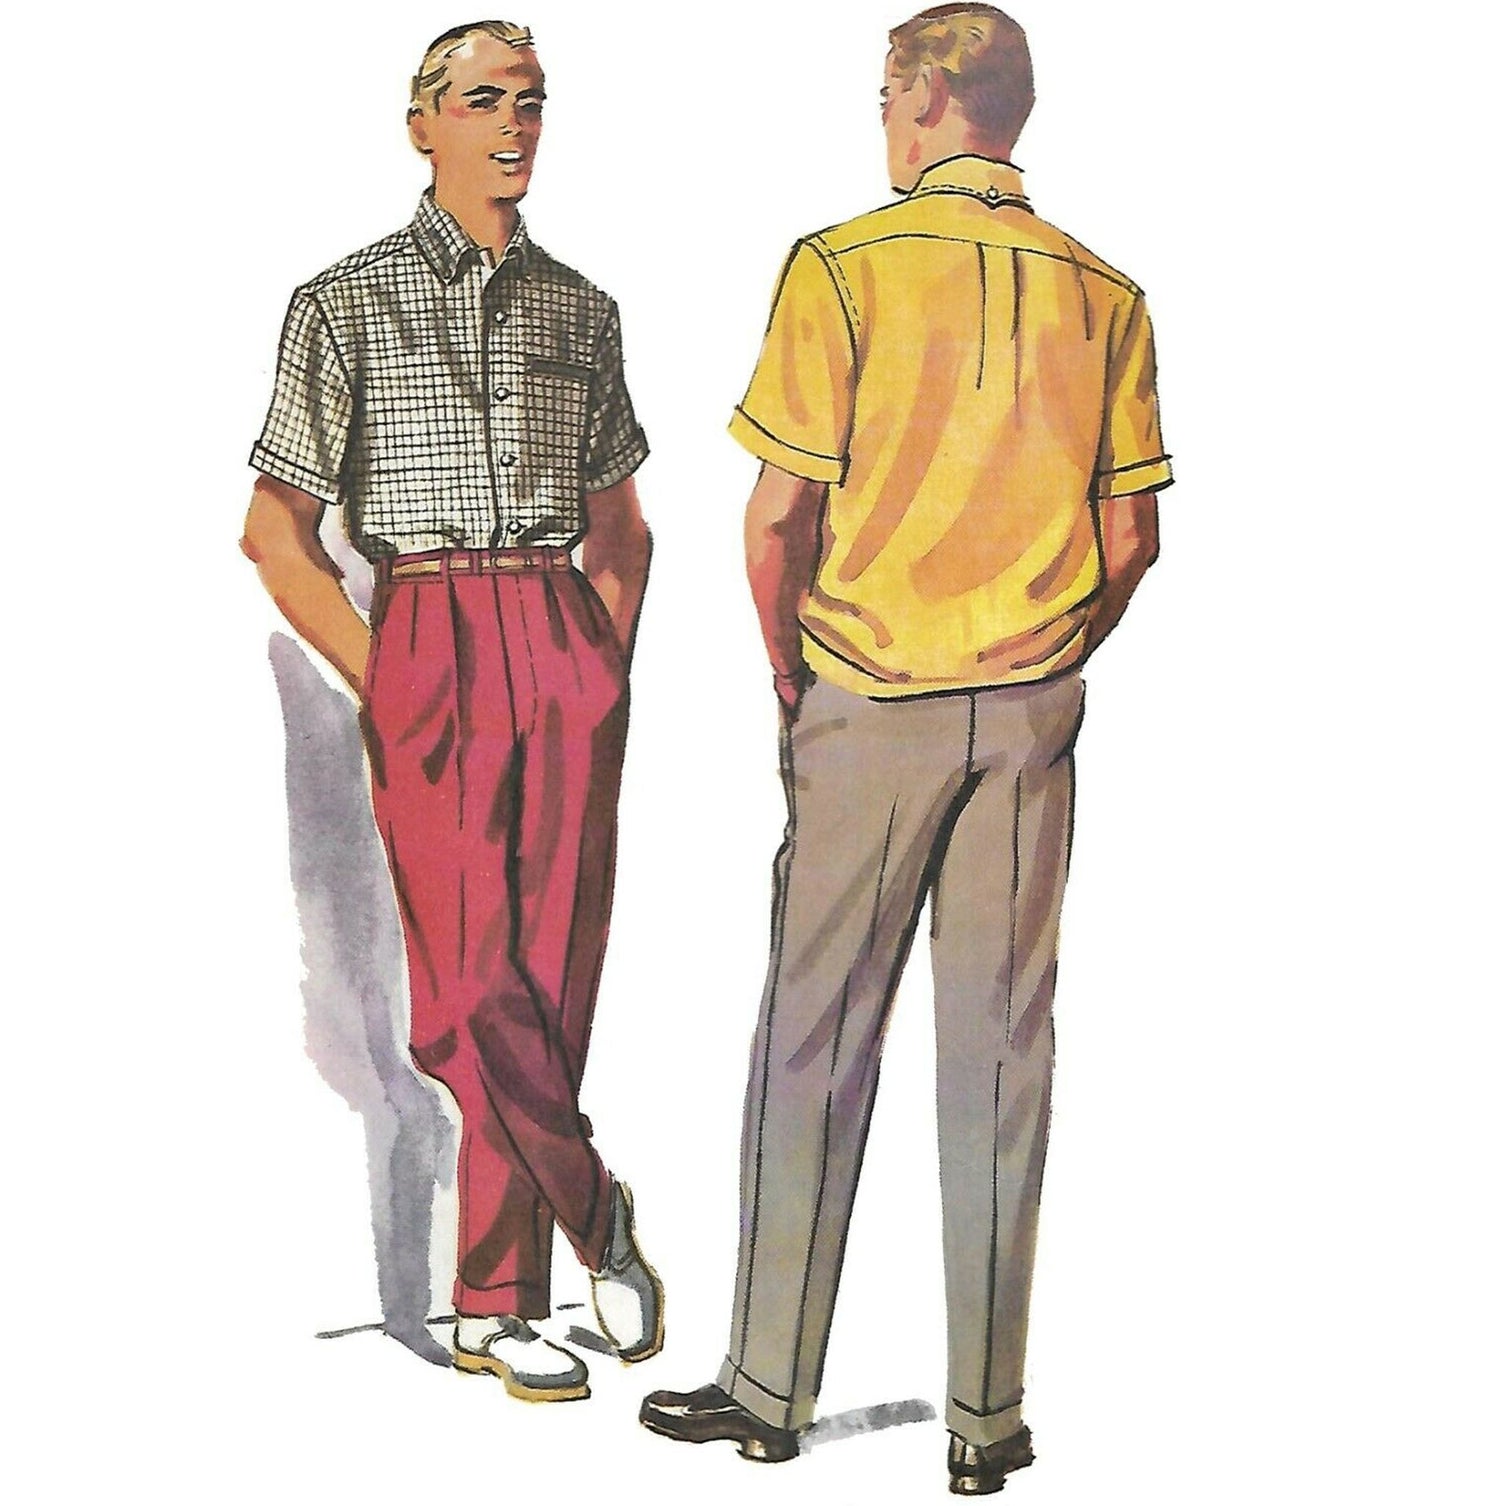 Buy Vintage 1950s Sewing Pattern: Dapper Men's Slacks With Pleats  Multi-sizes Online in India - Etsy